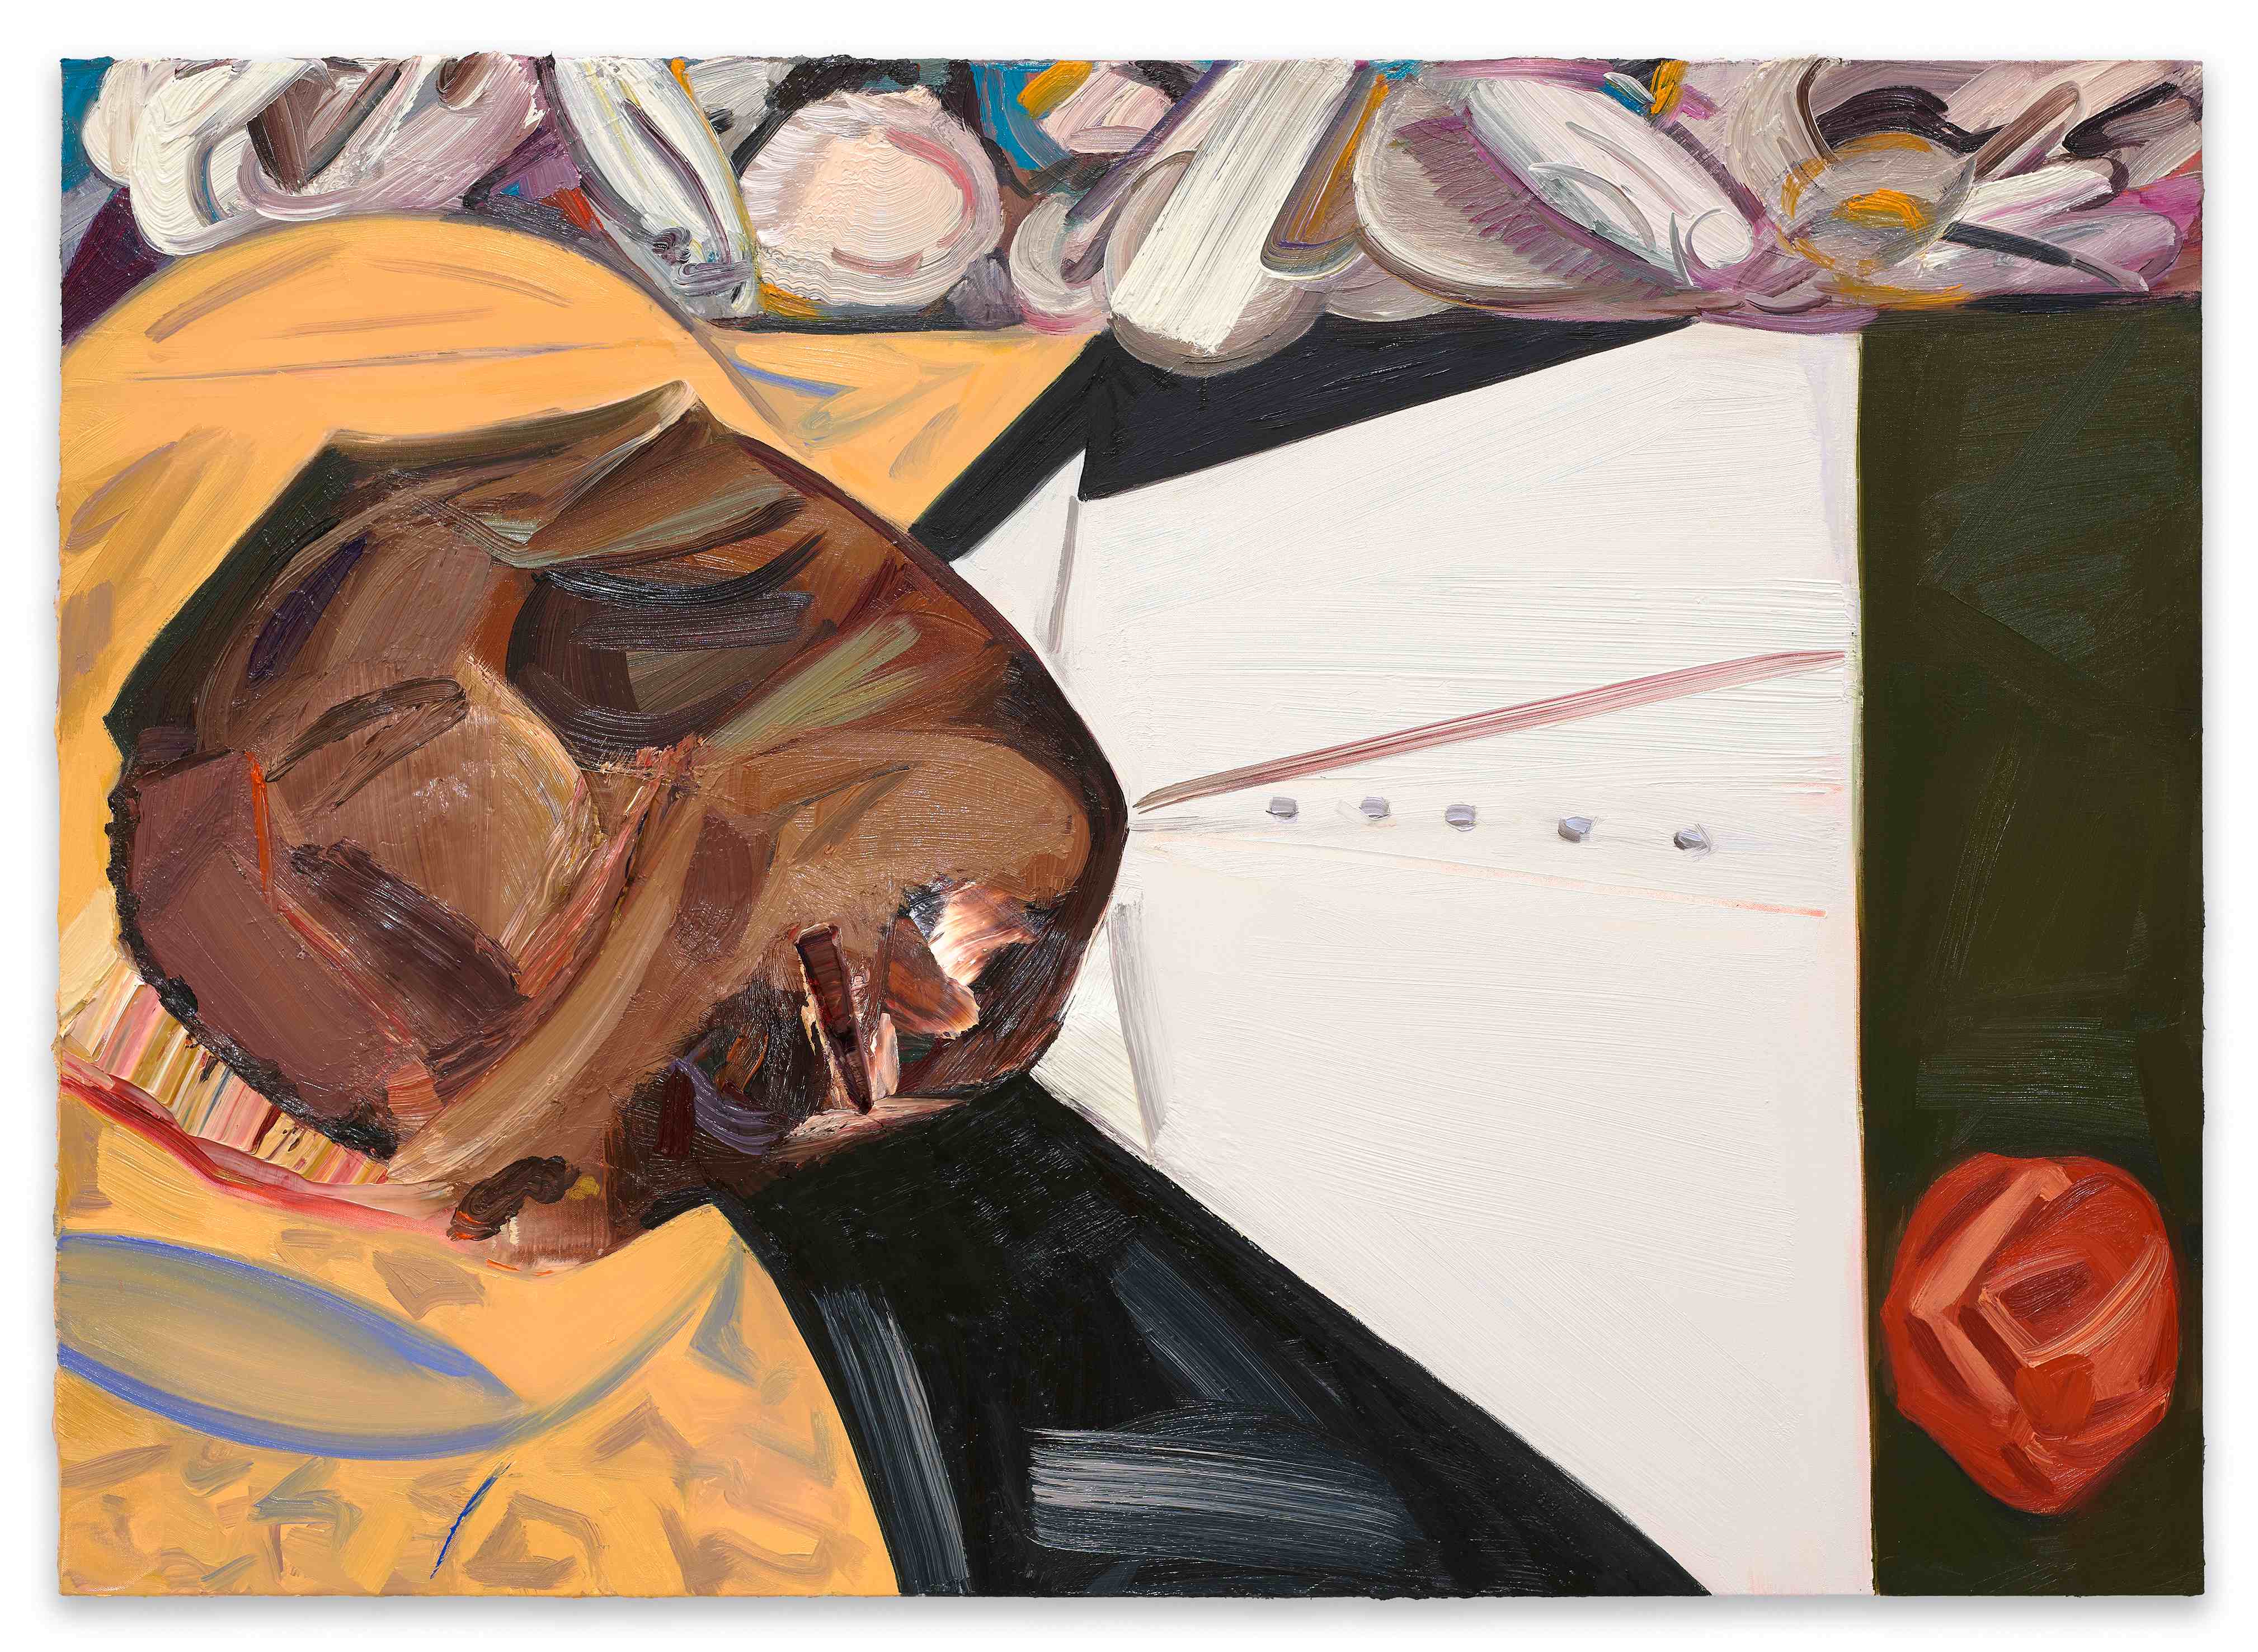 Painting Of Emmett Till At Whitney Biennial Sparks Protest Artnet News